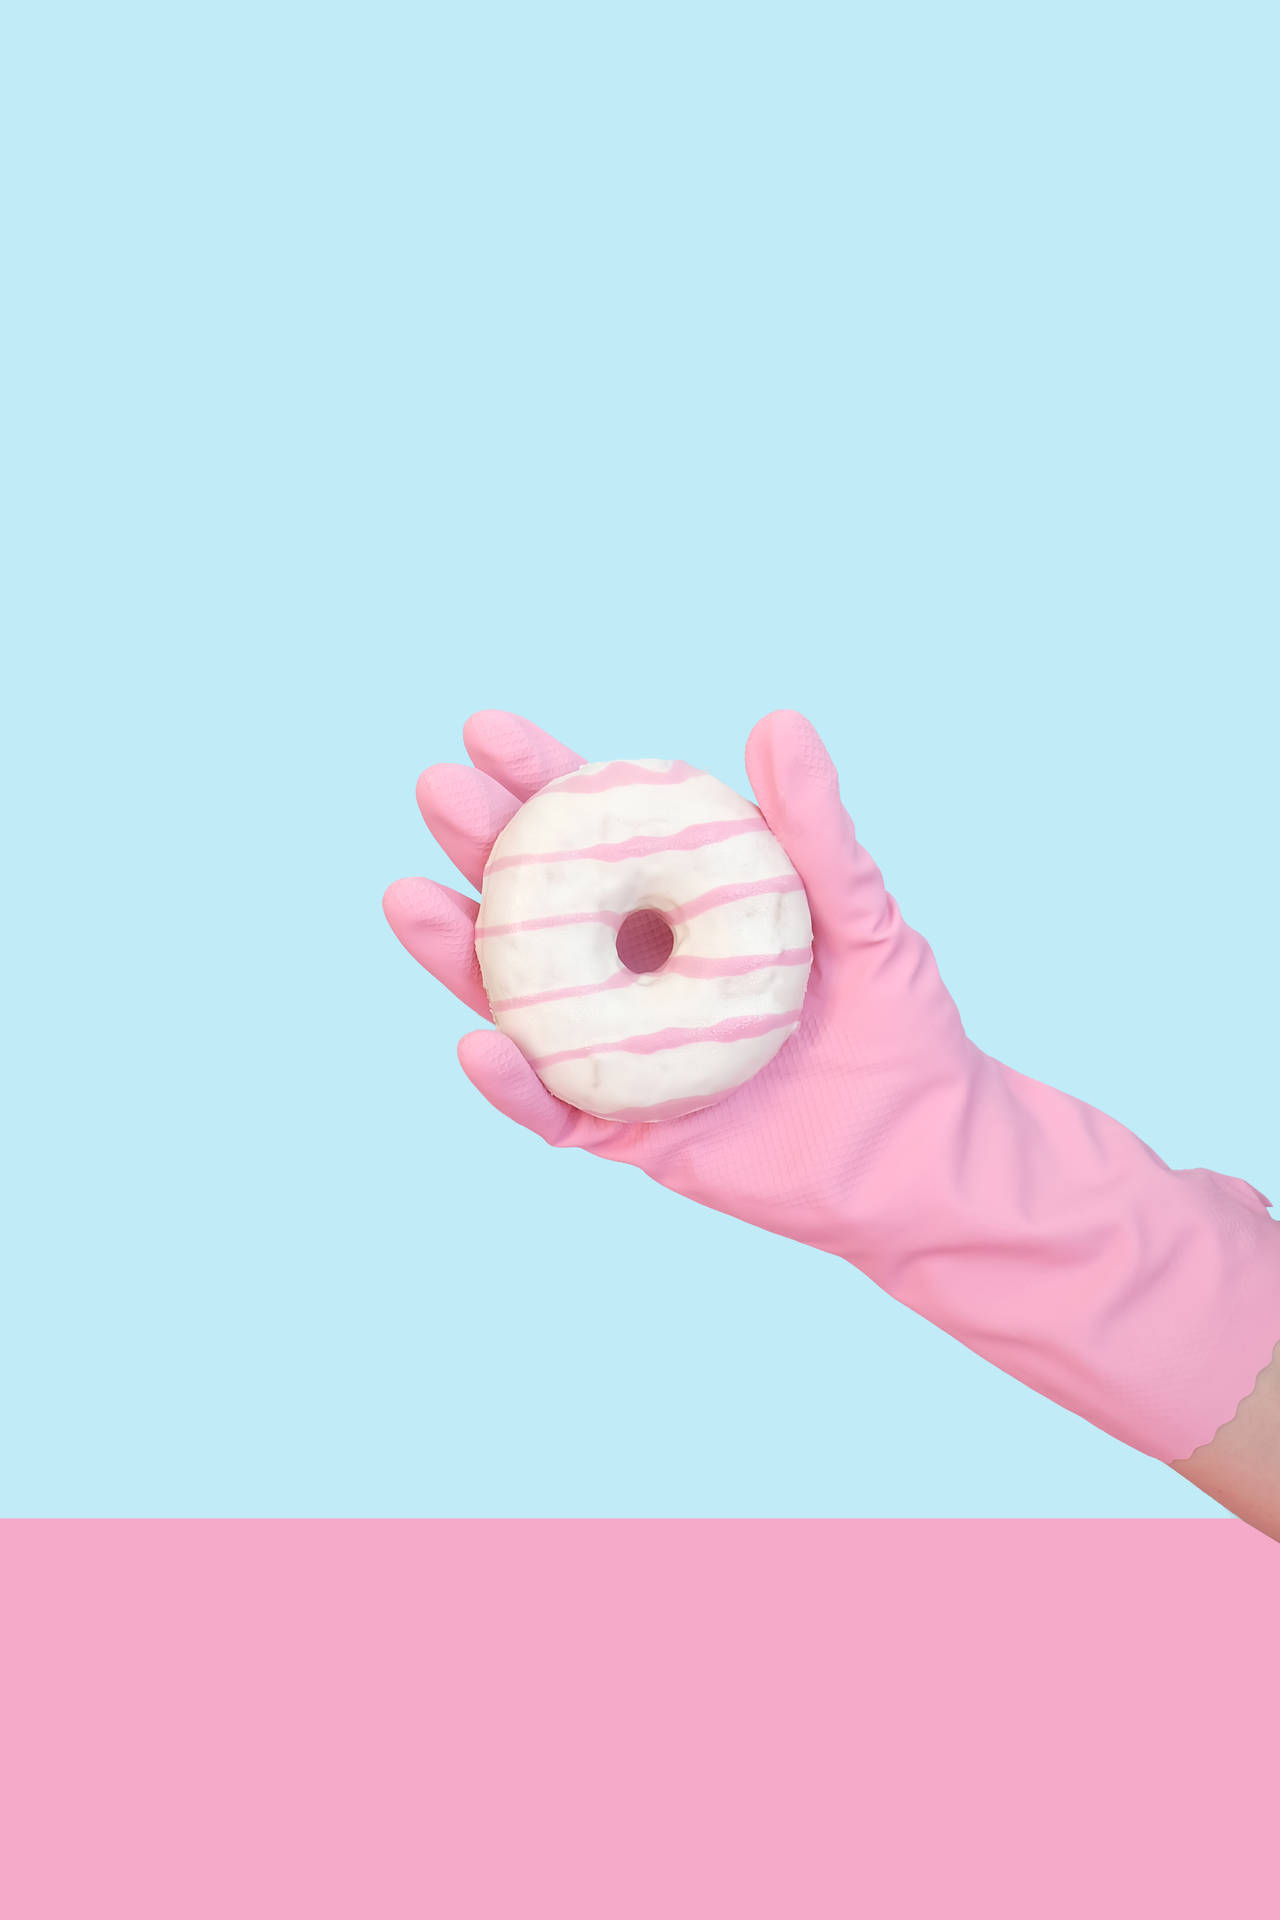 Pastel Pink Aesthetic Gloves Wallpaper